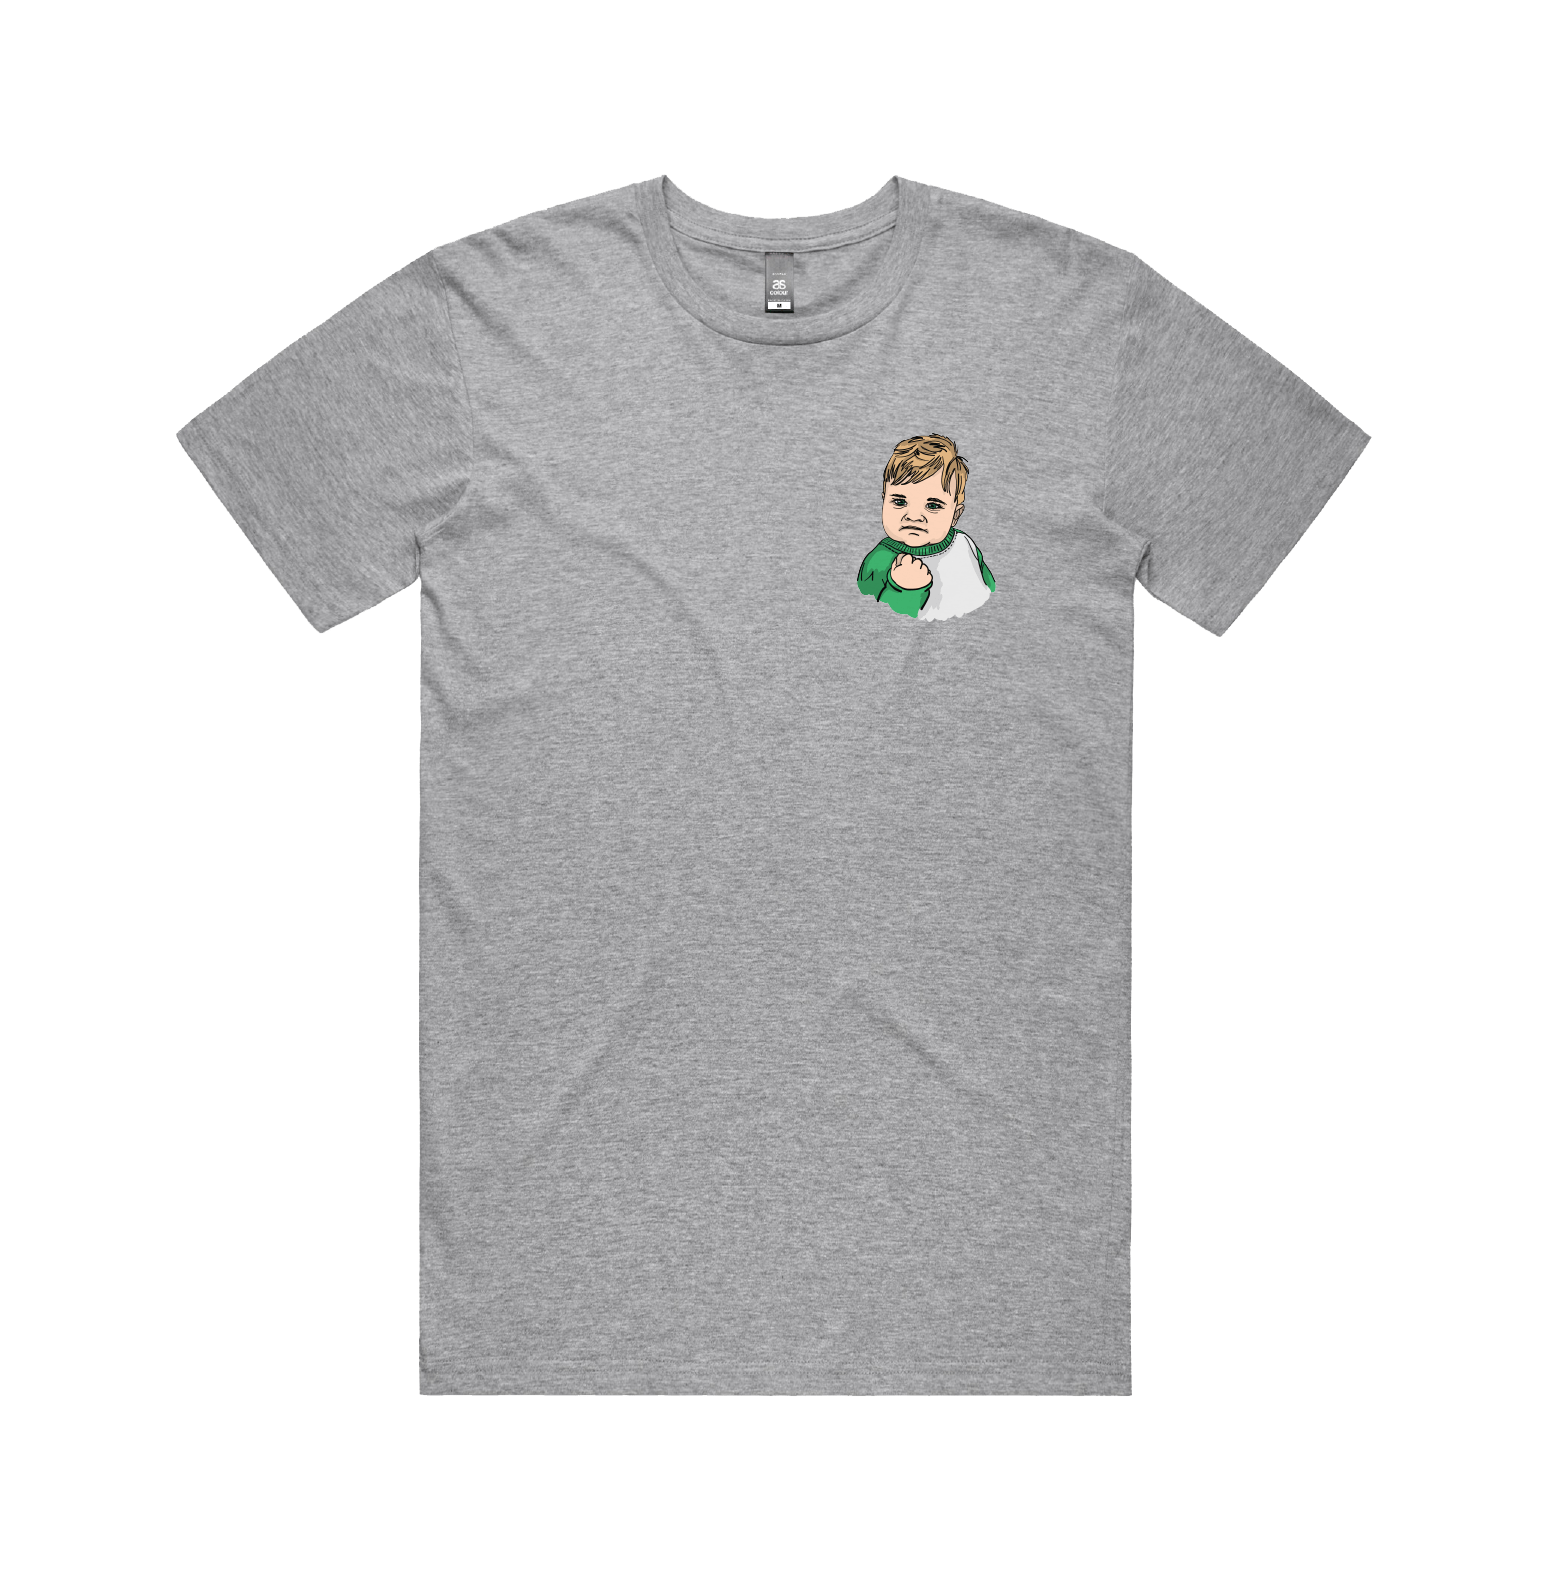 S / Grey / Small Front Design Success Kid ✊ - Men's T Shirt